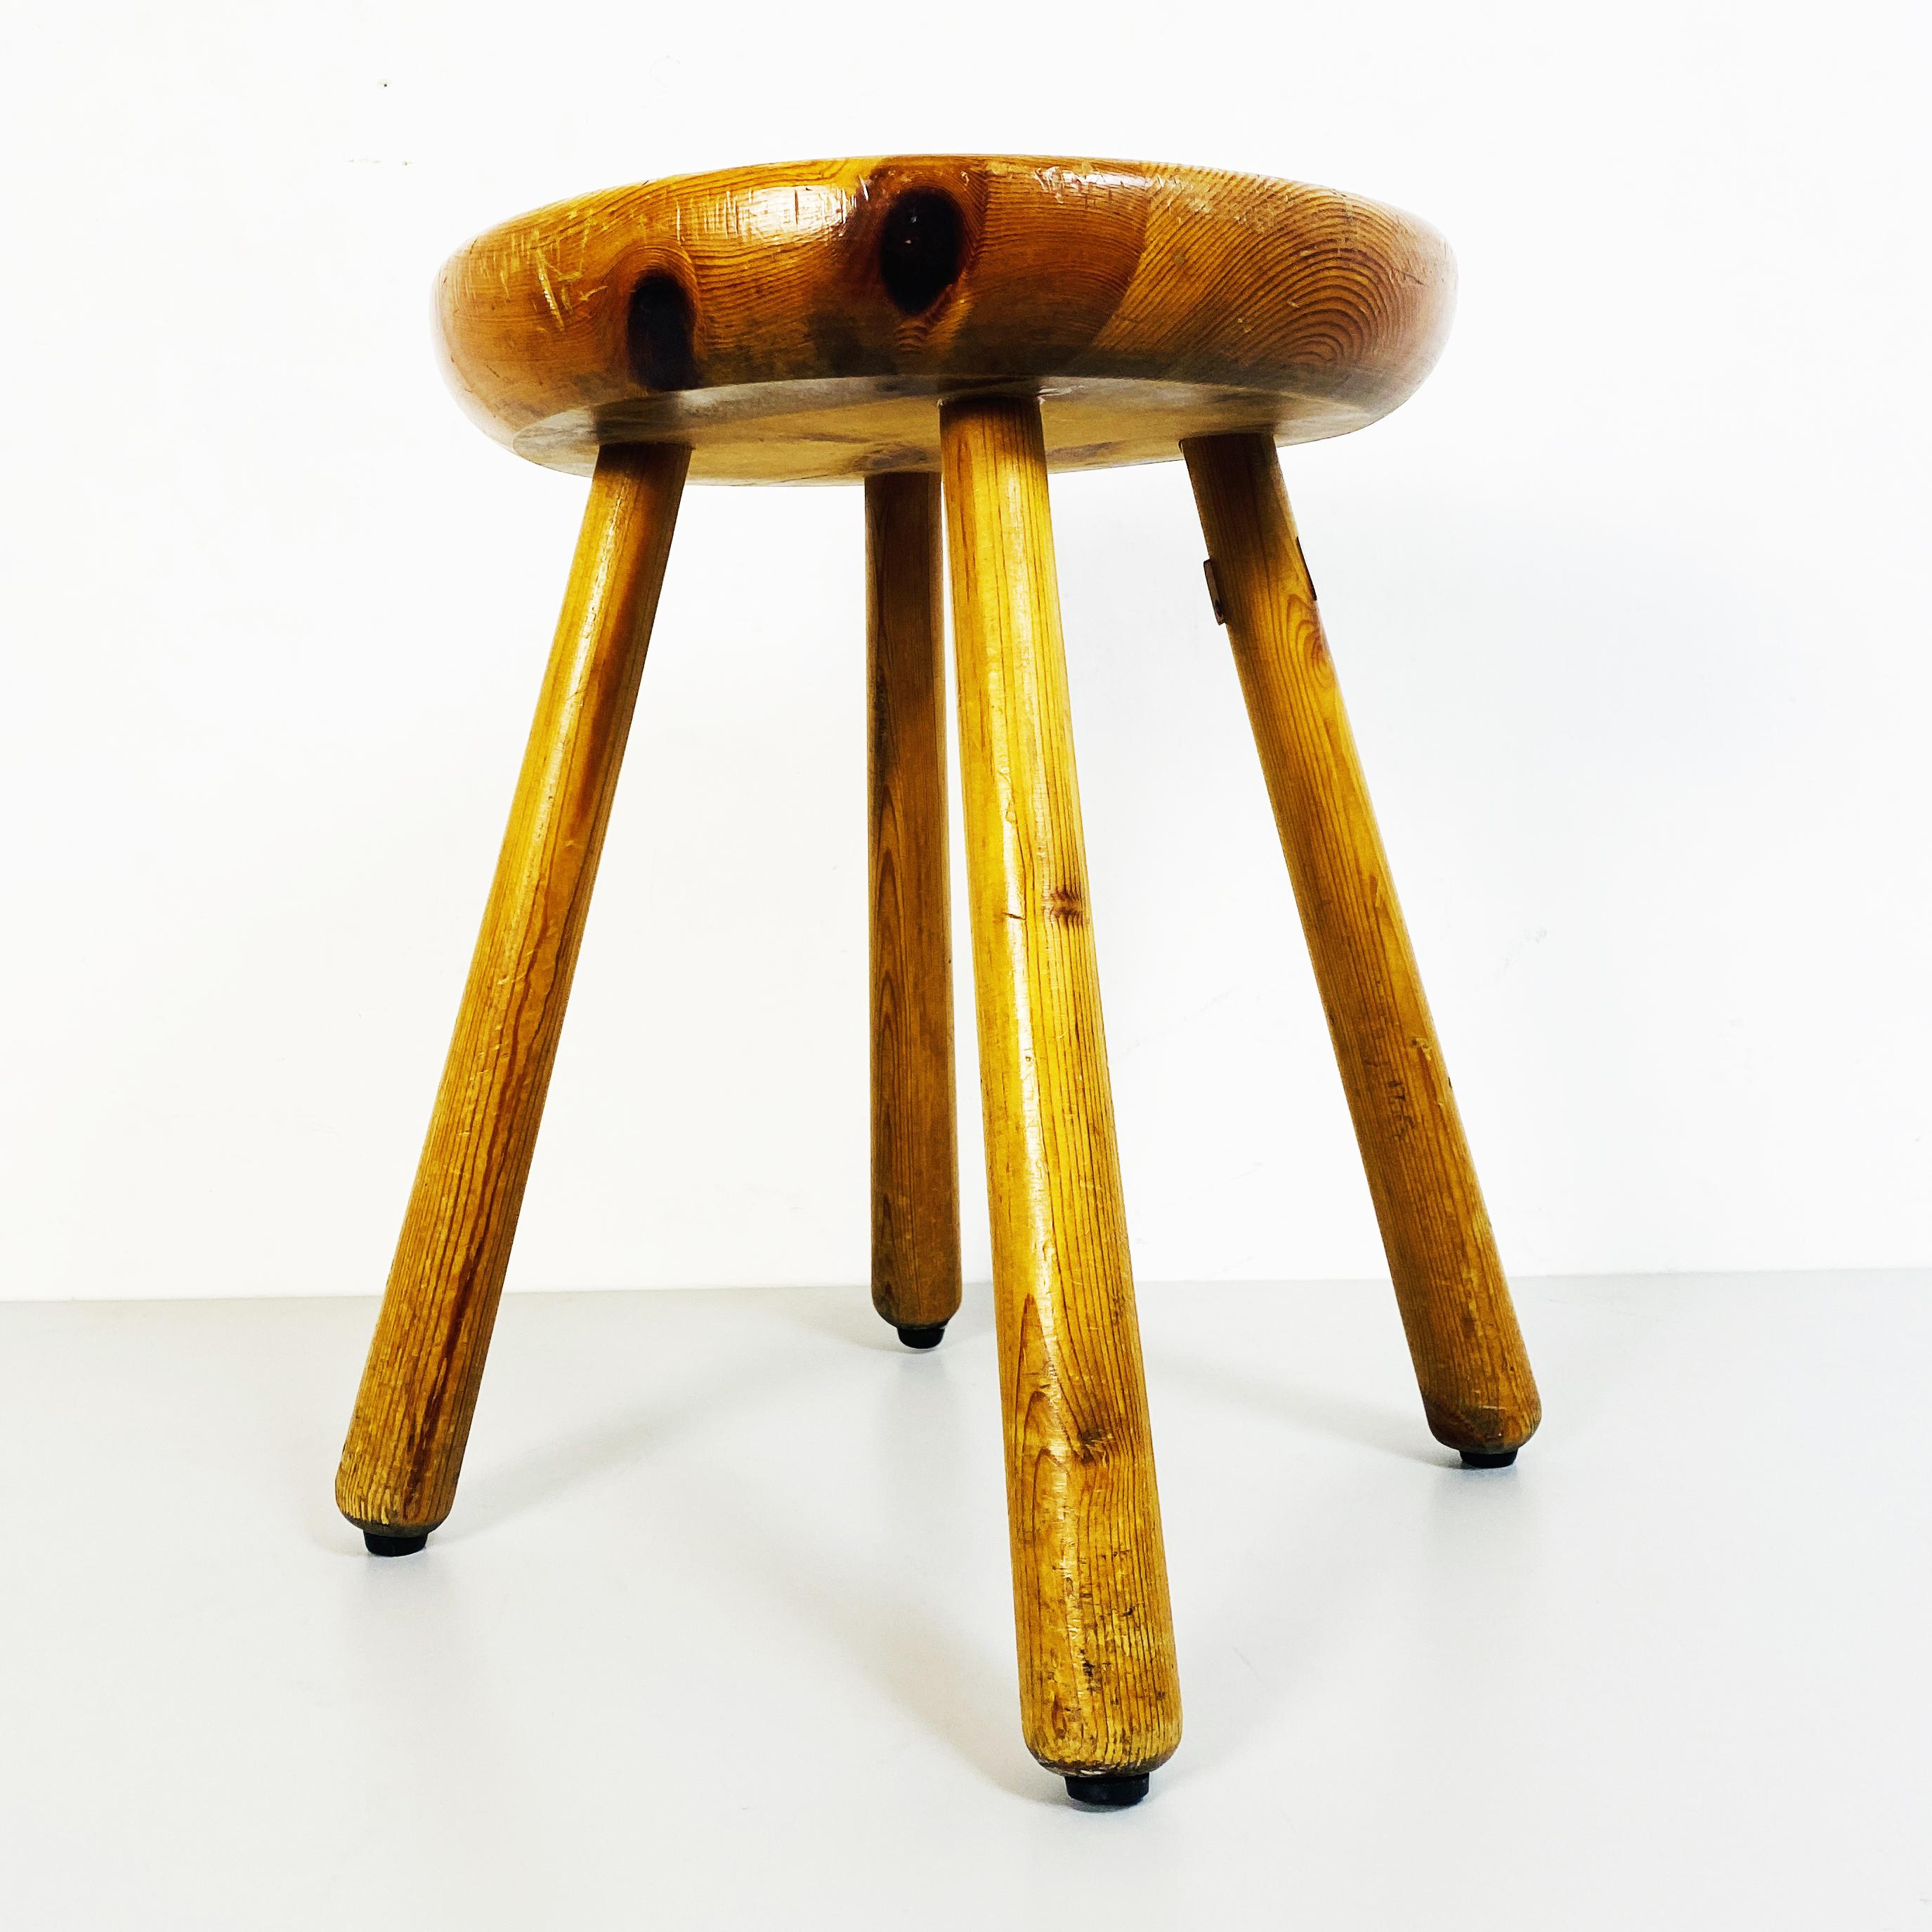 Italian Mid-Century Rustic Wooden Stool, 1960s For Sale 1